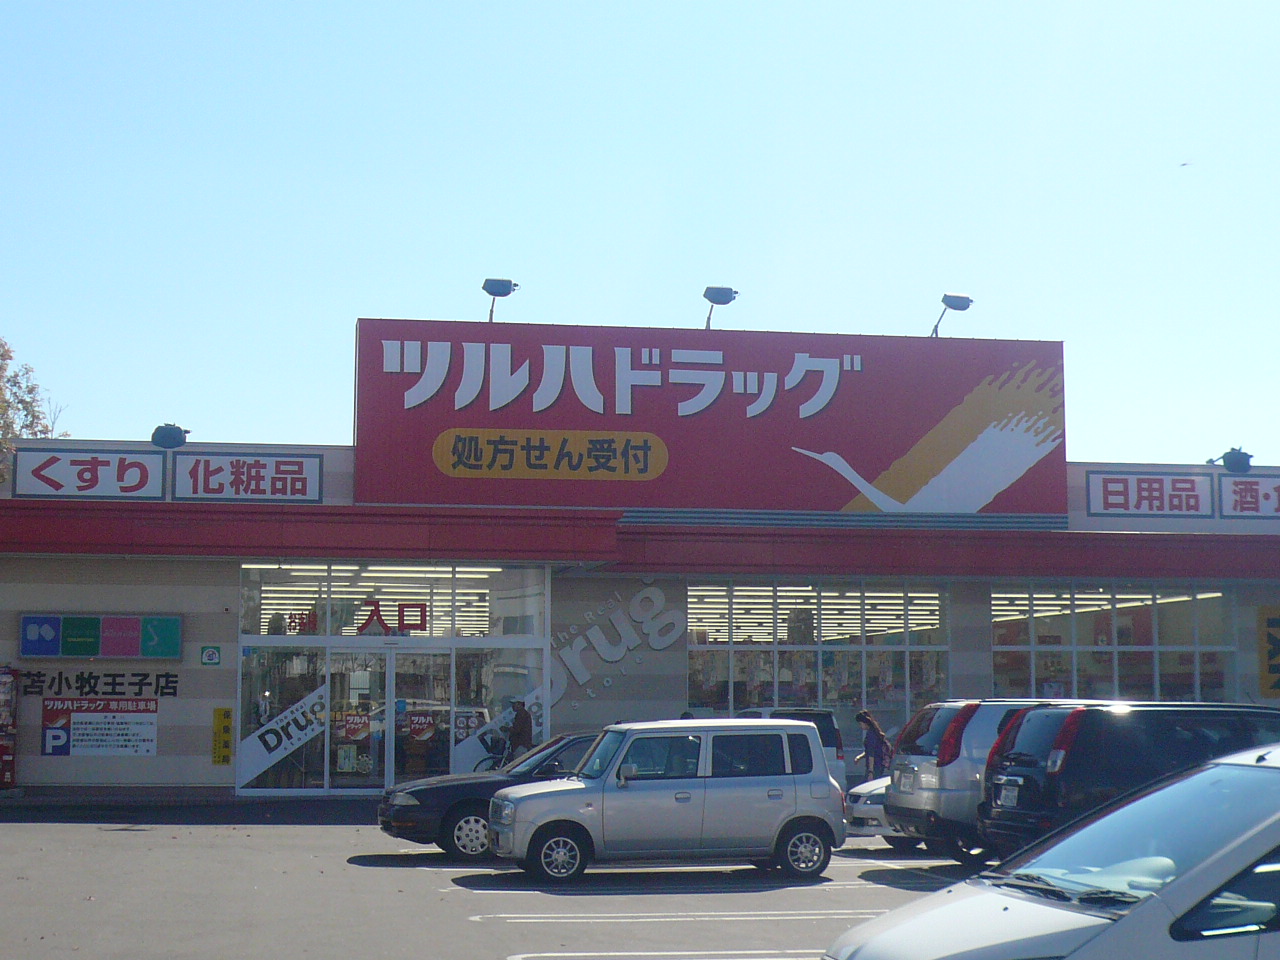 Dorakkusutoa. Tsuruha drag Tomakomai Prince shop 537m until (drugstore)